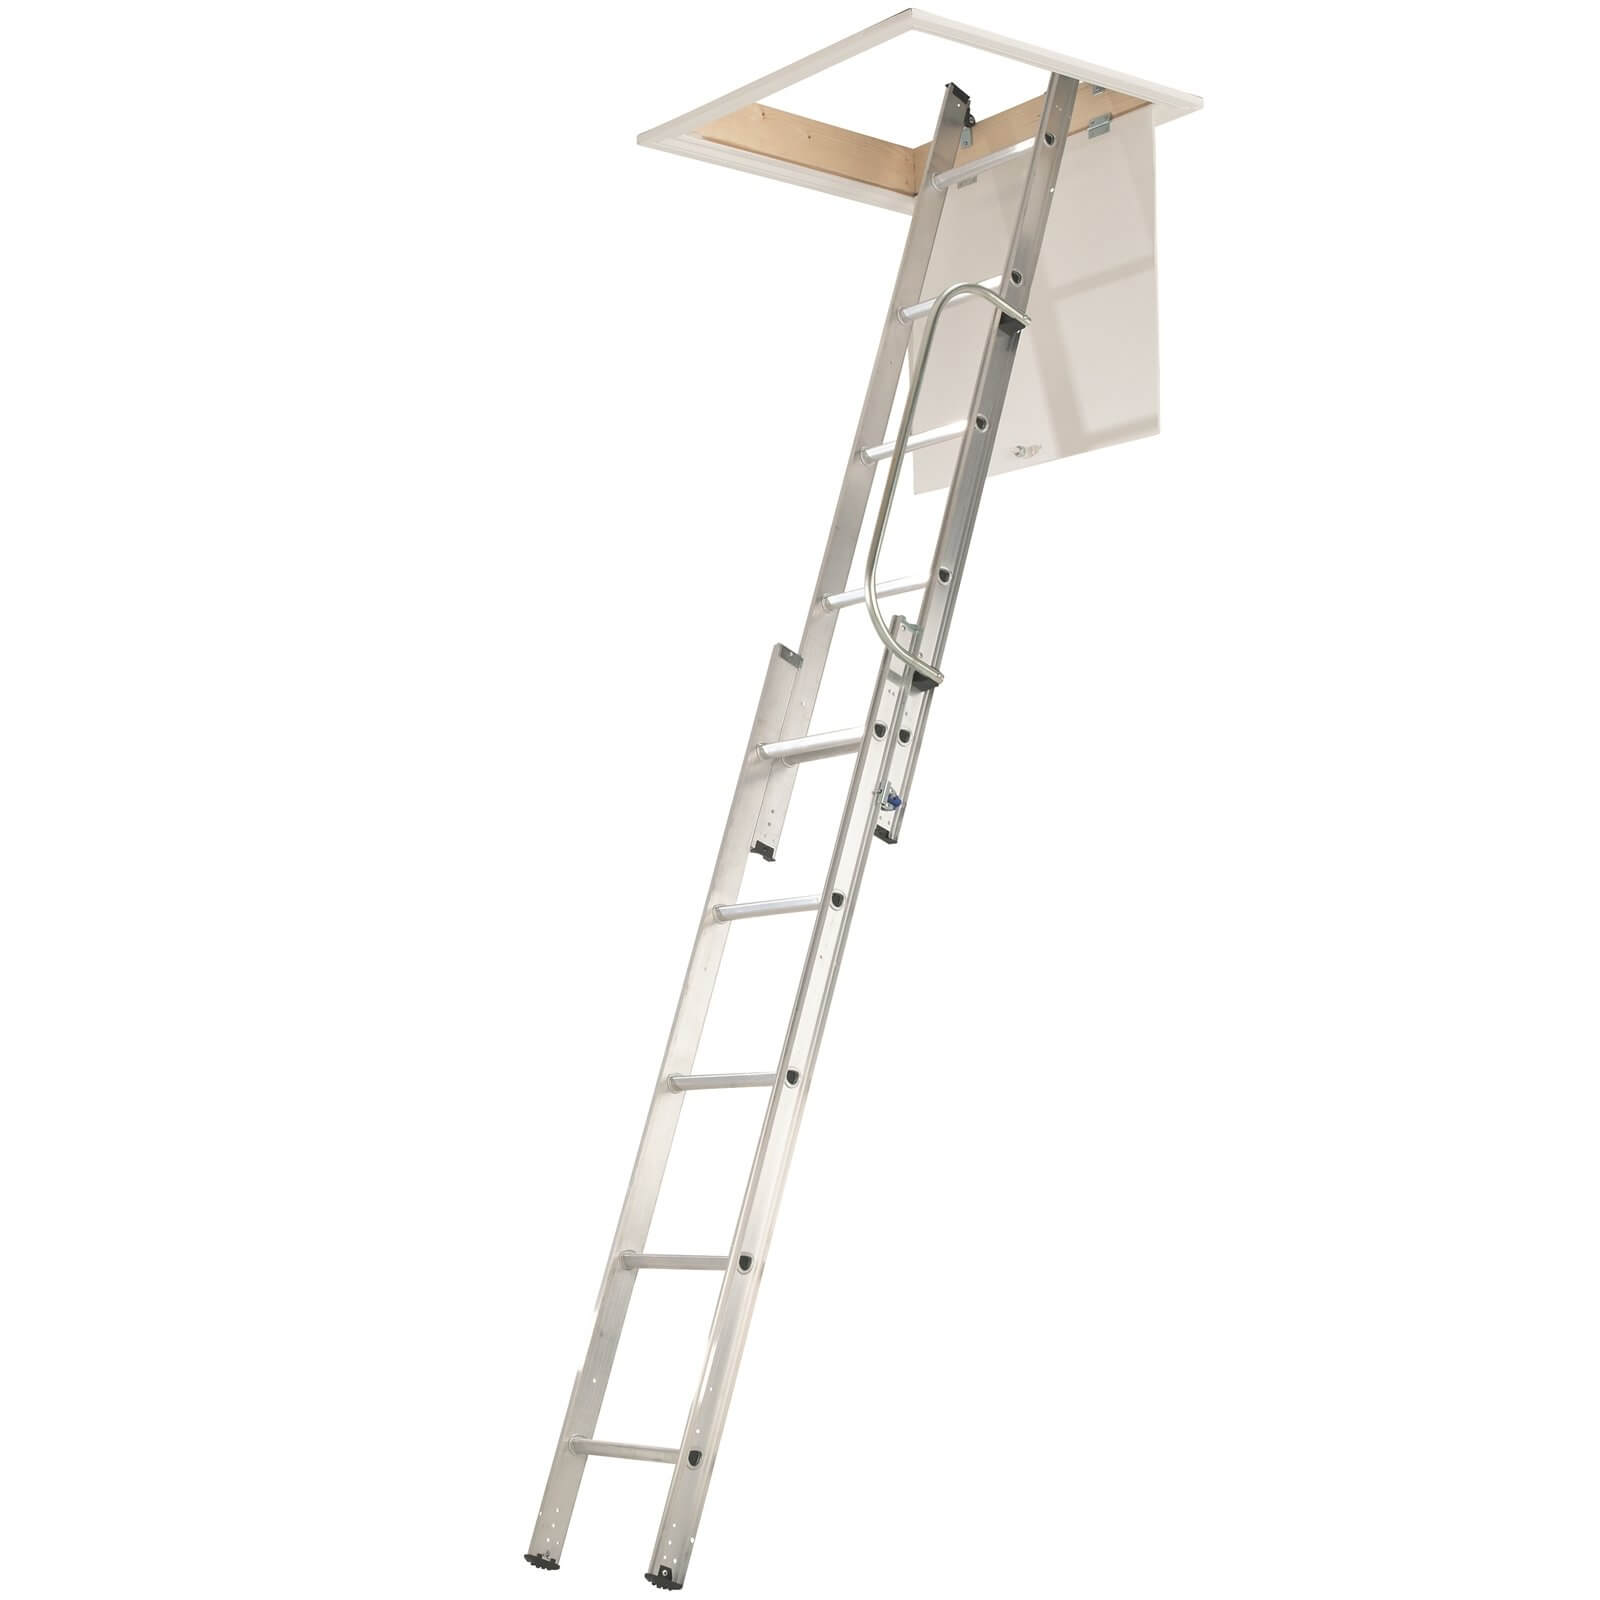 Abru 2 Section Loft Ladder with Handrail